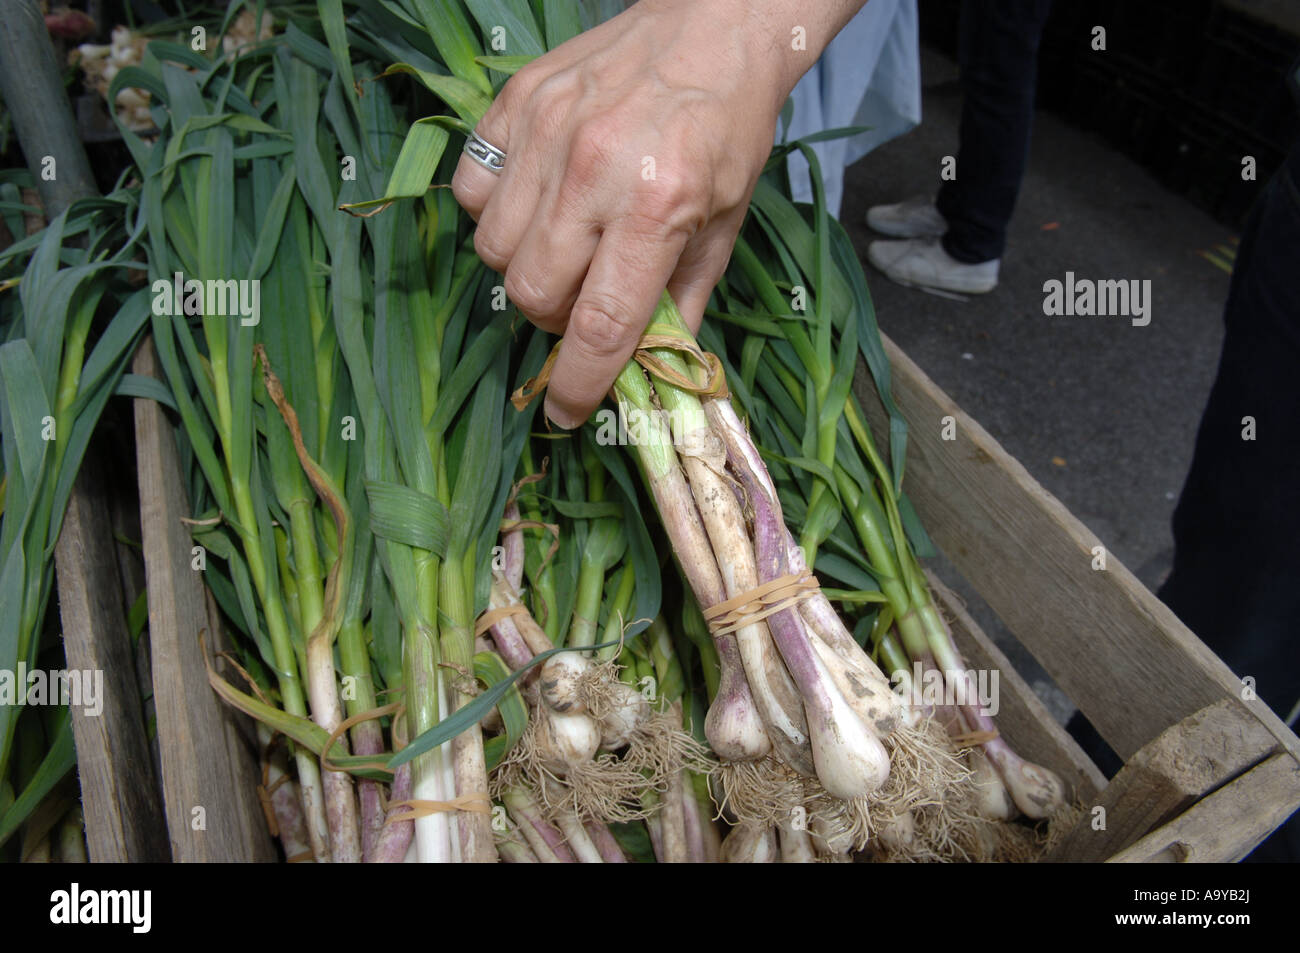 Green garlic at the Union Square Greenmarket Stock Photo